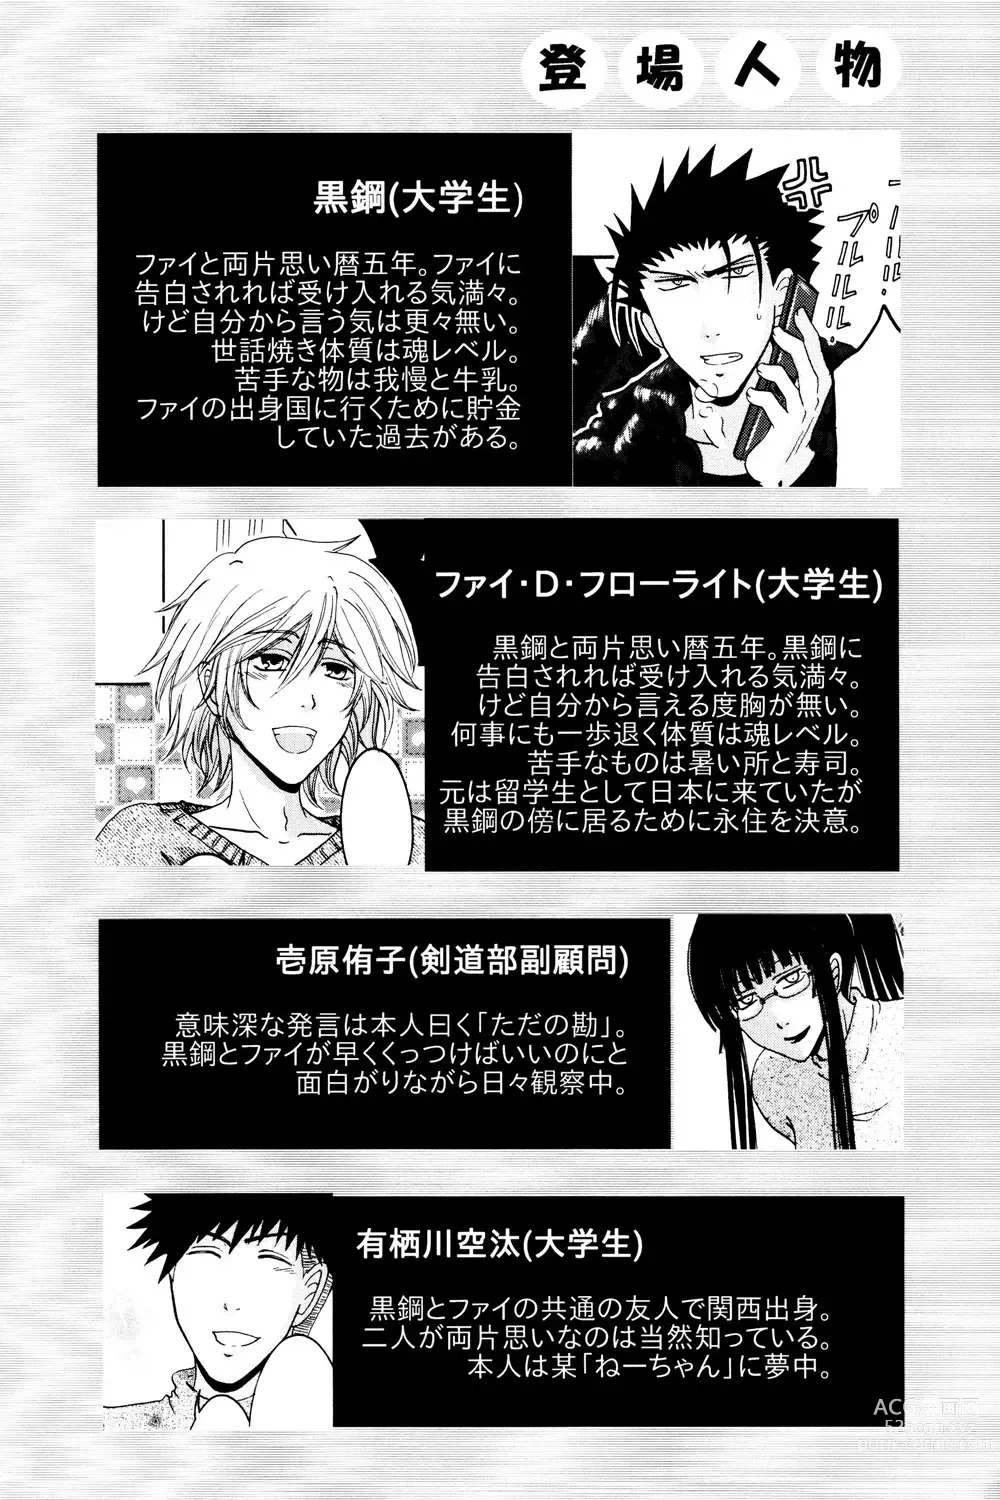 Page 3 of doujinshi New Year wa Kimi no Bed de.